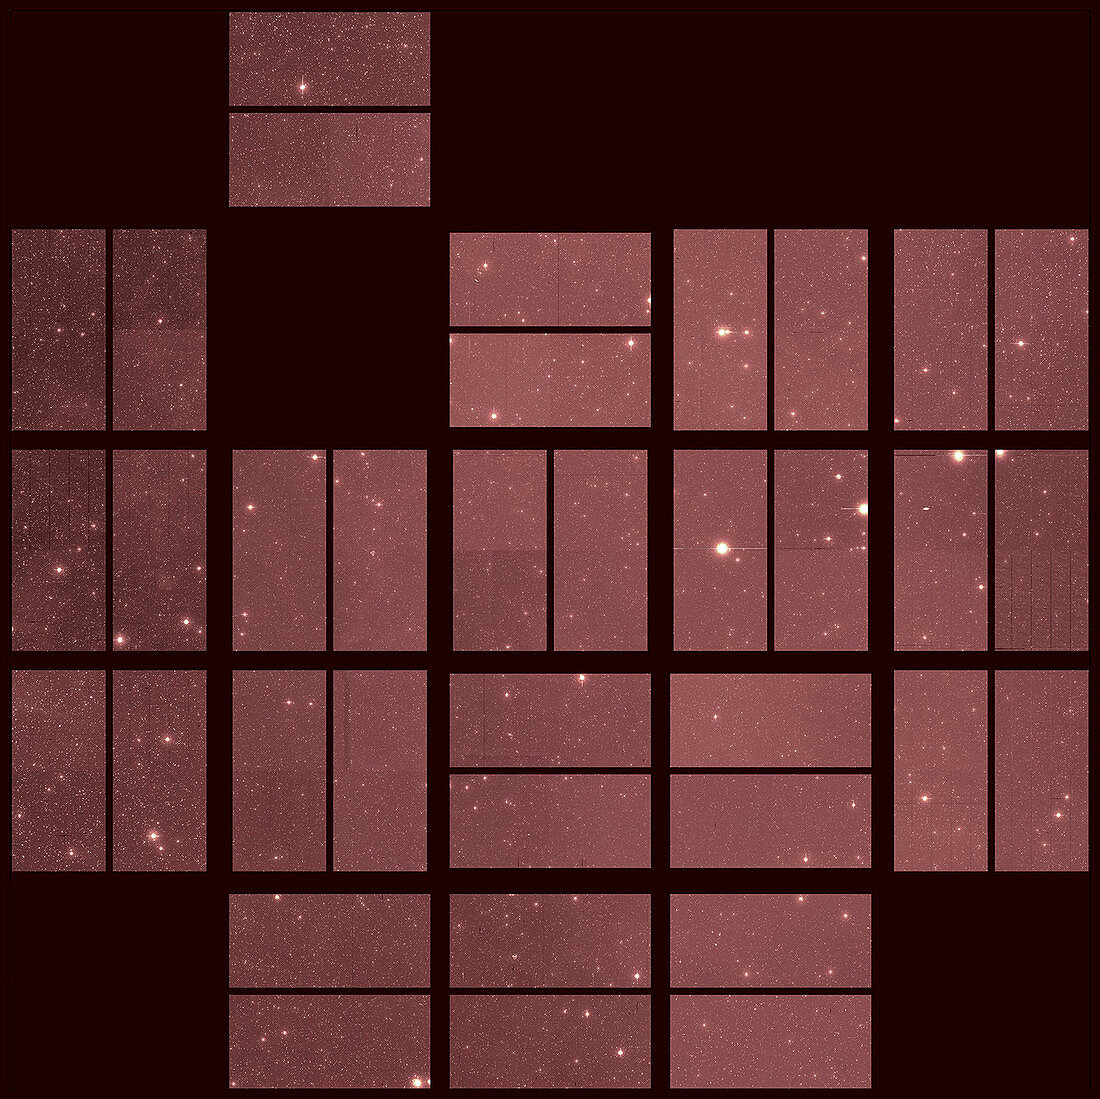 Kepler space telescope's final image